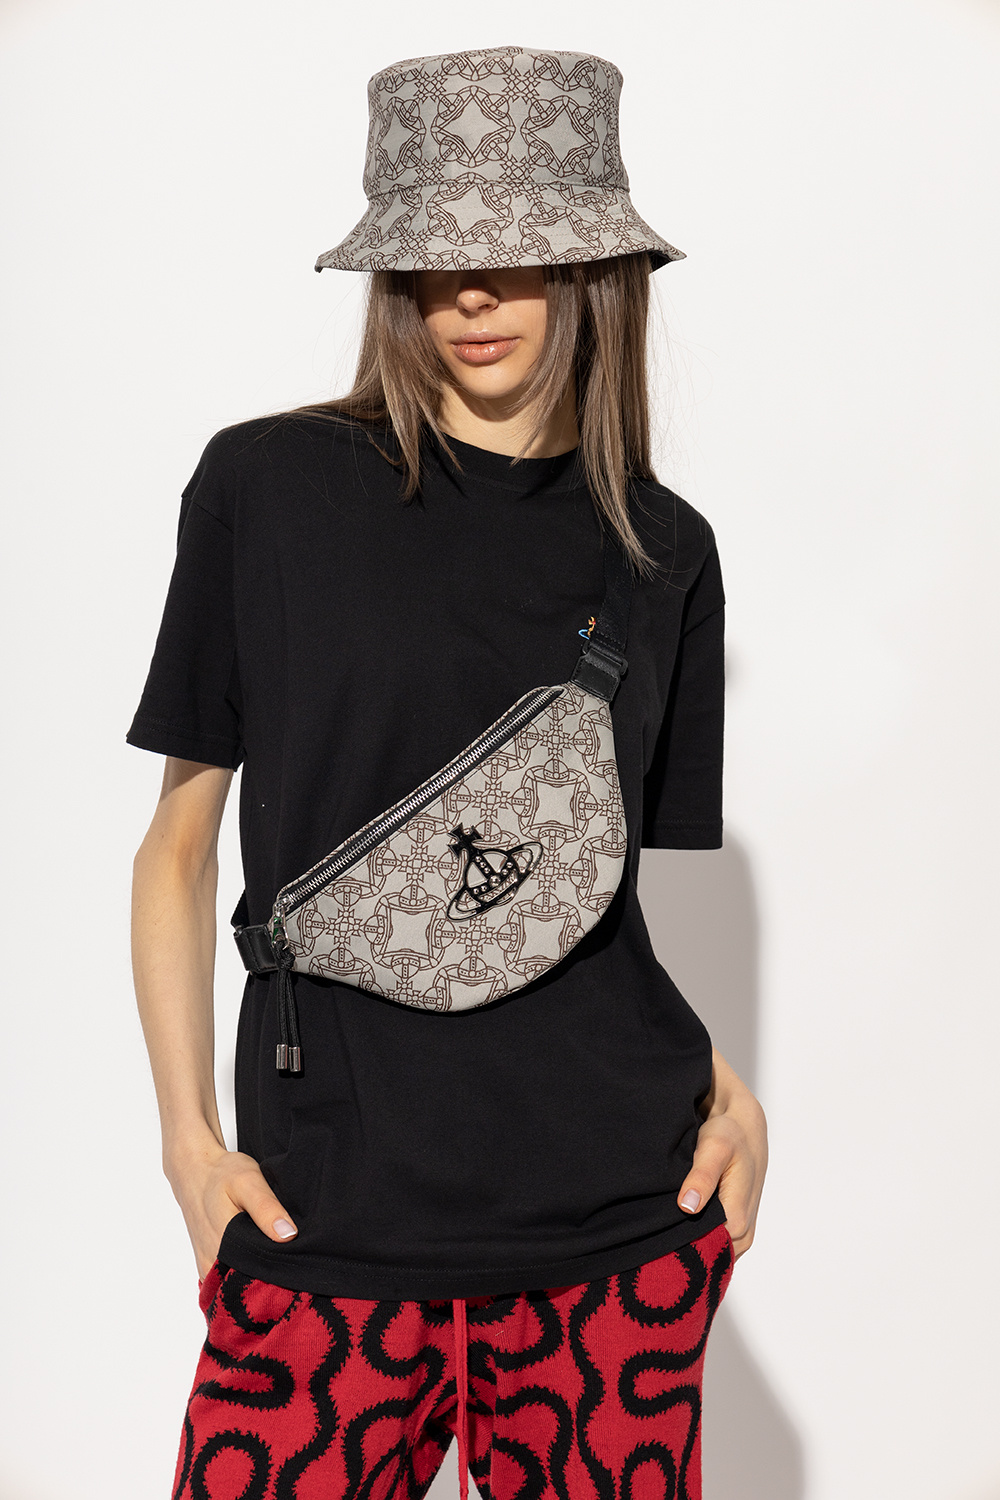 Vivienne Westwood 'Hilda Small' belt bag | Men's Bags | IetpShops